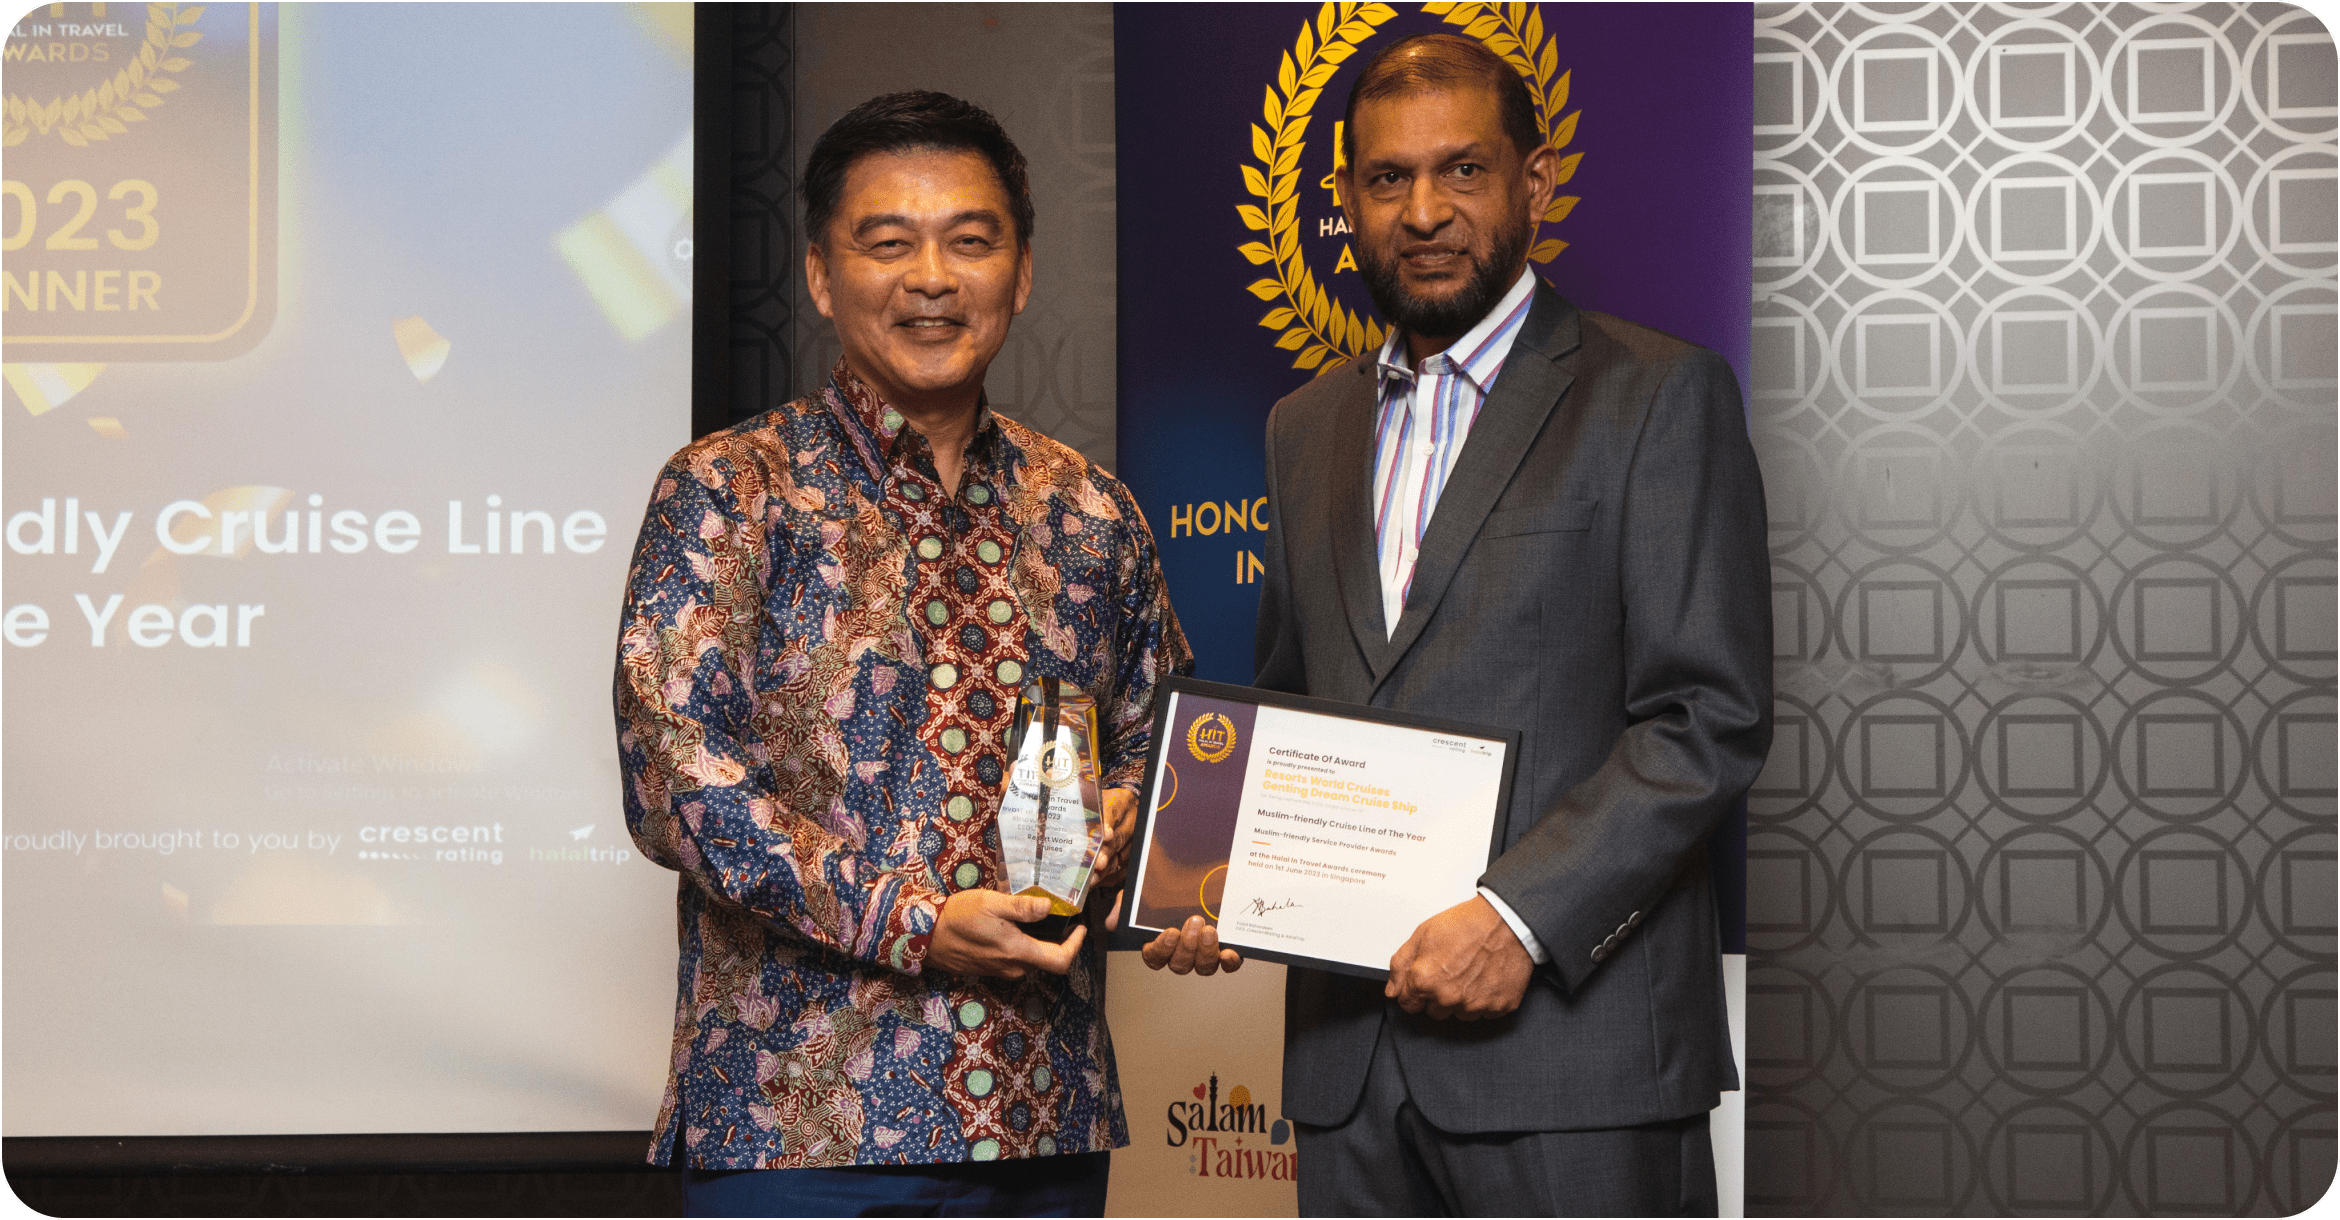 Muslim-friendly Service Provider Awards